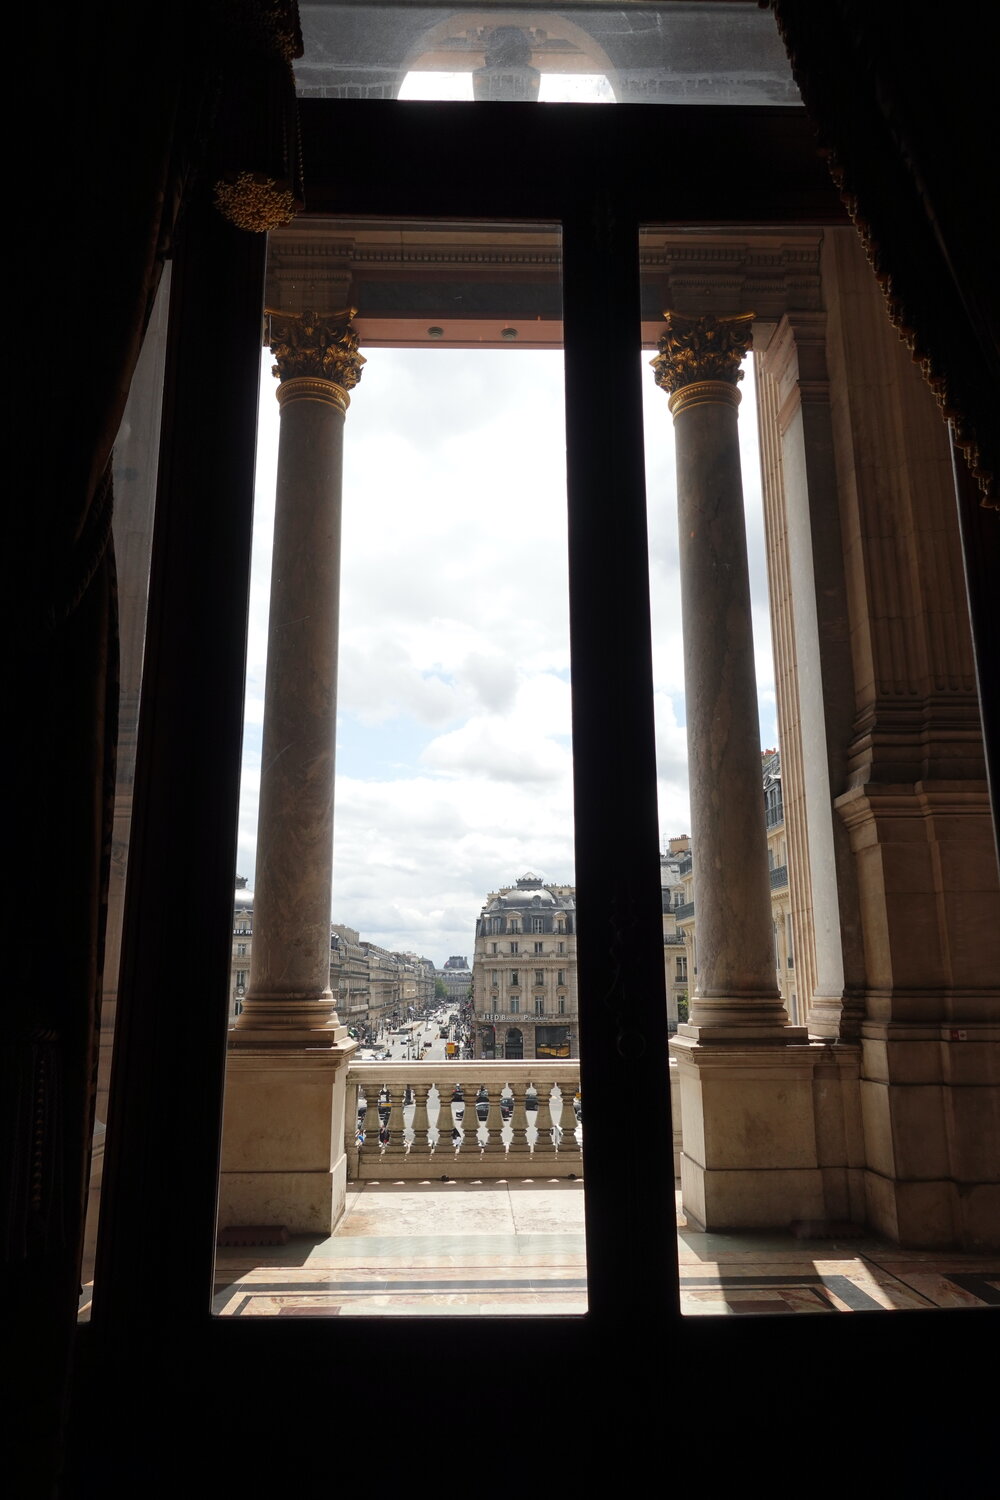 Views from Grand Foyer of Palais Garnier, Paris